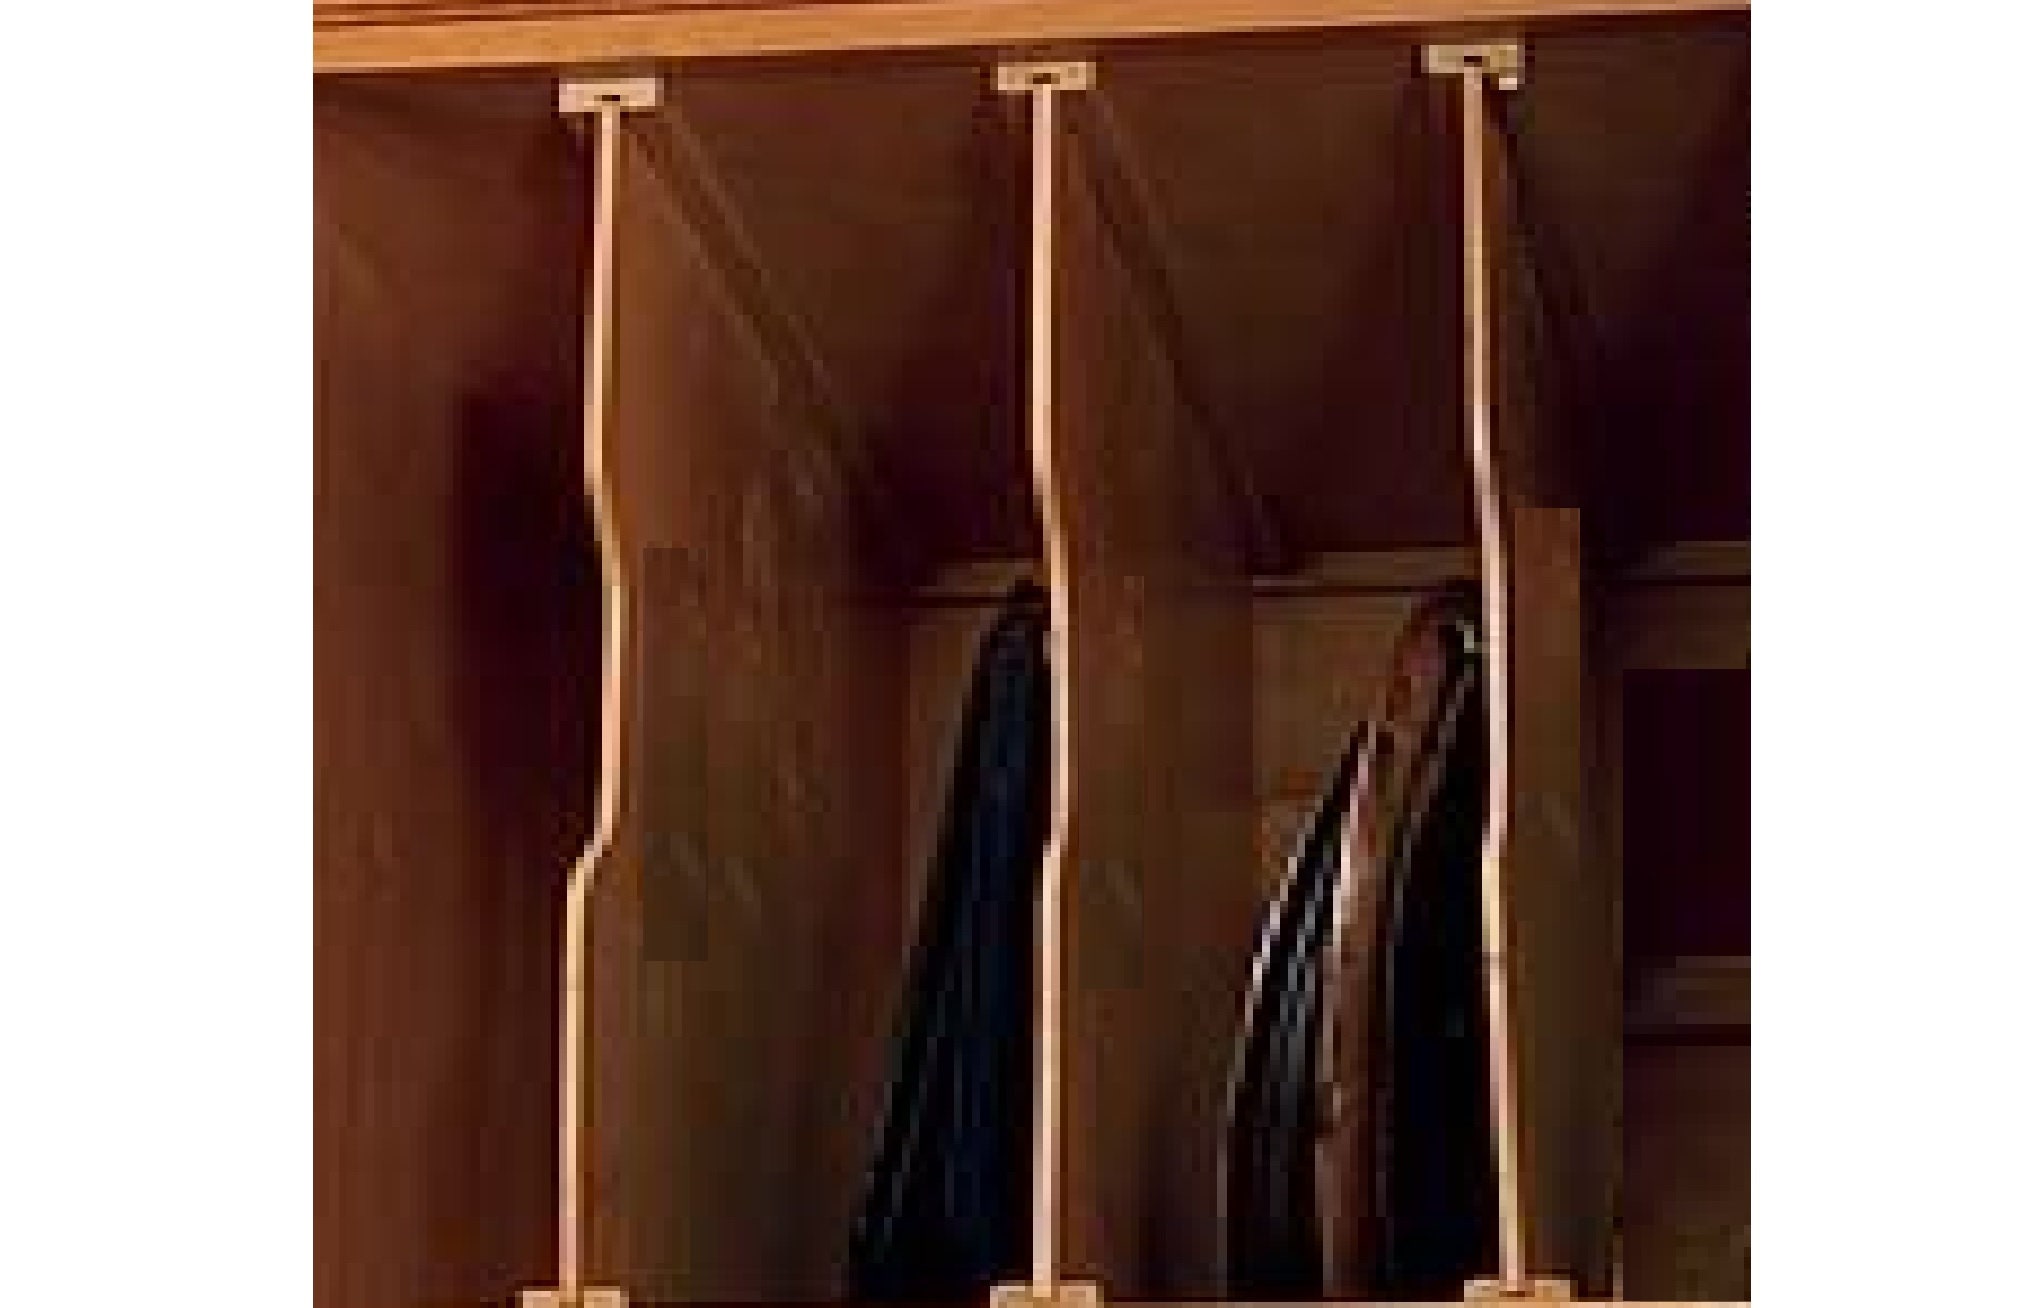 White Shelf Melamine Cut to Size 18mm Thickness Custom Measurements Replacement  Cabinet Shelf Kitchen Cupboard Wardrobe 